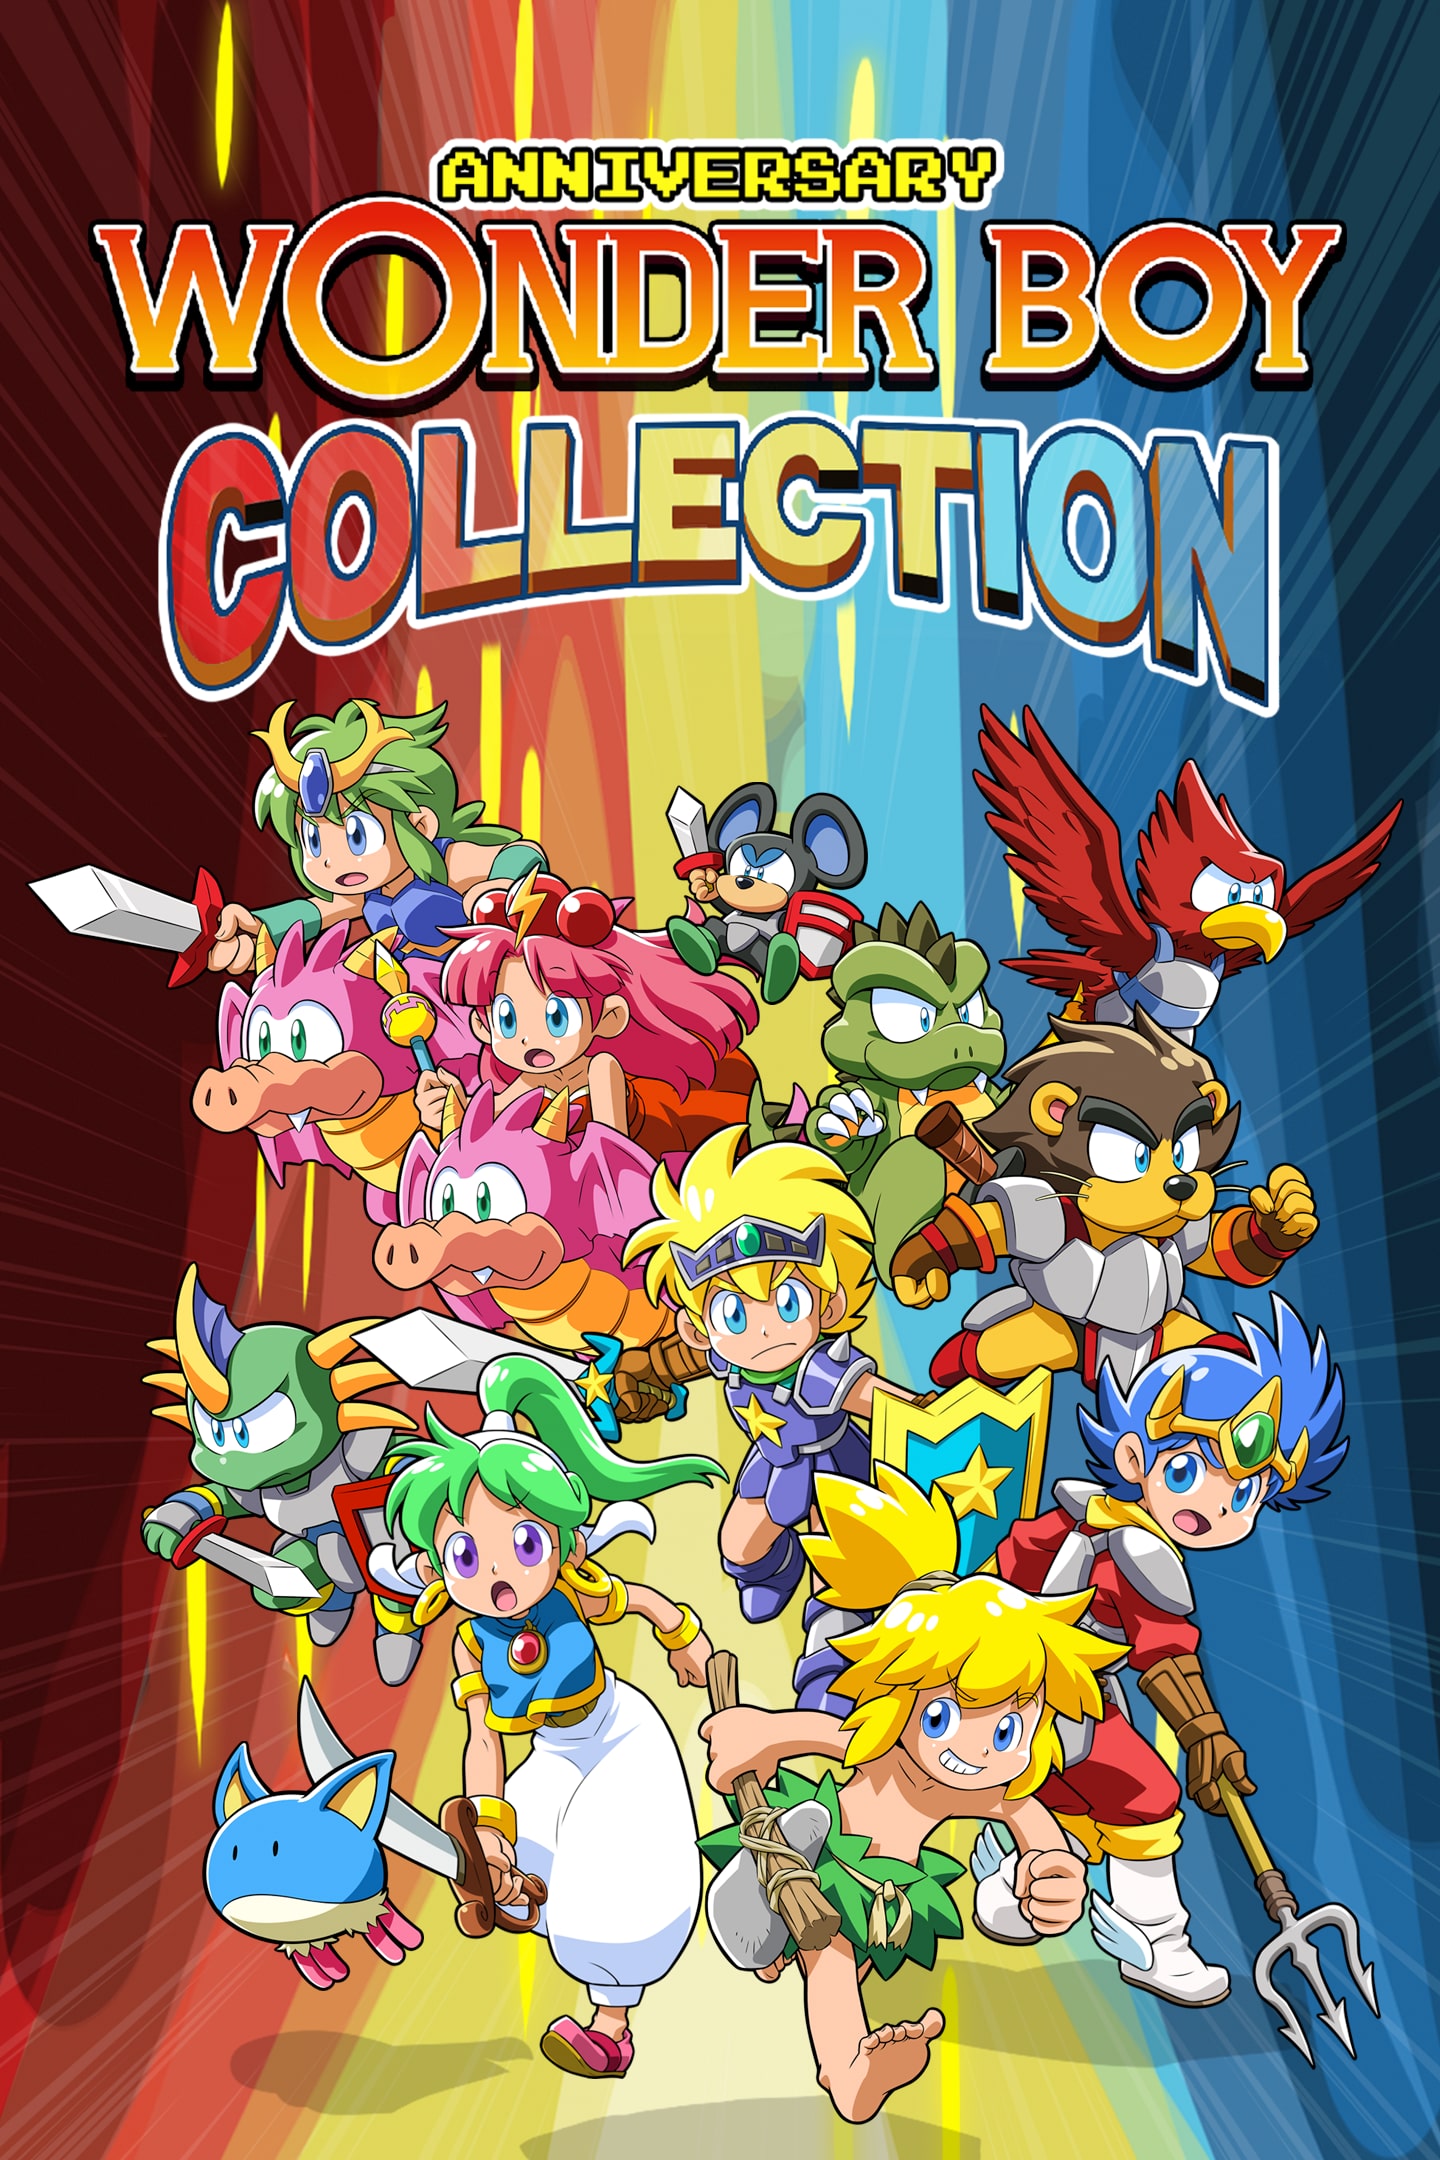 Wonder Boy Collection - Compatível com PlayStation 4